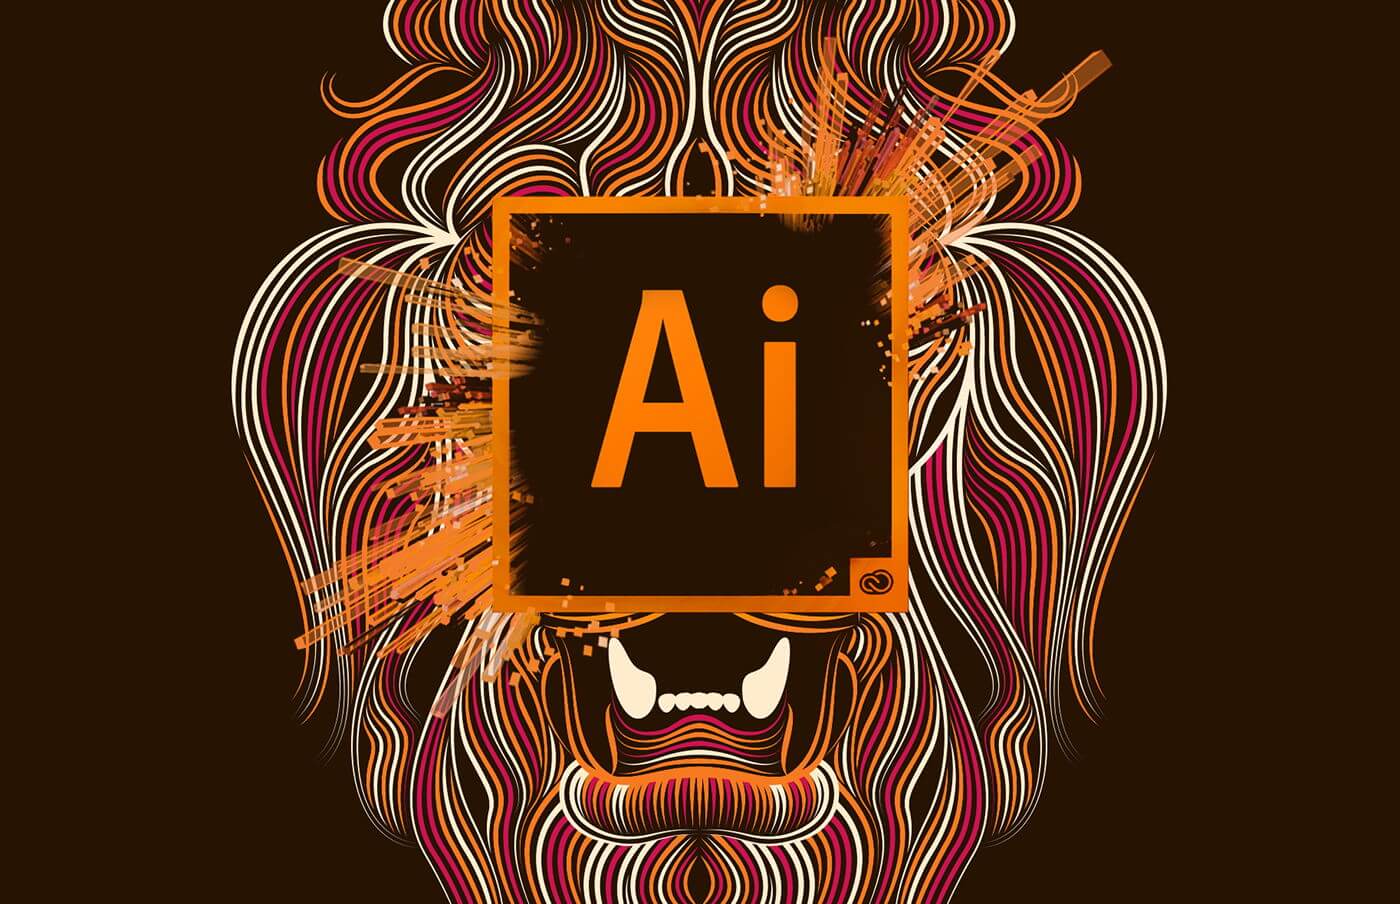 adobe illustrator Gold vector font free download